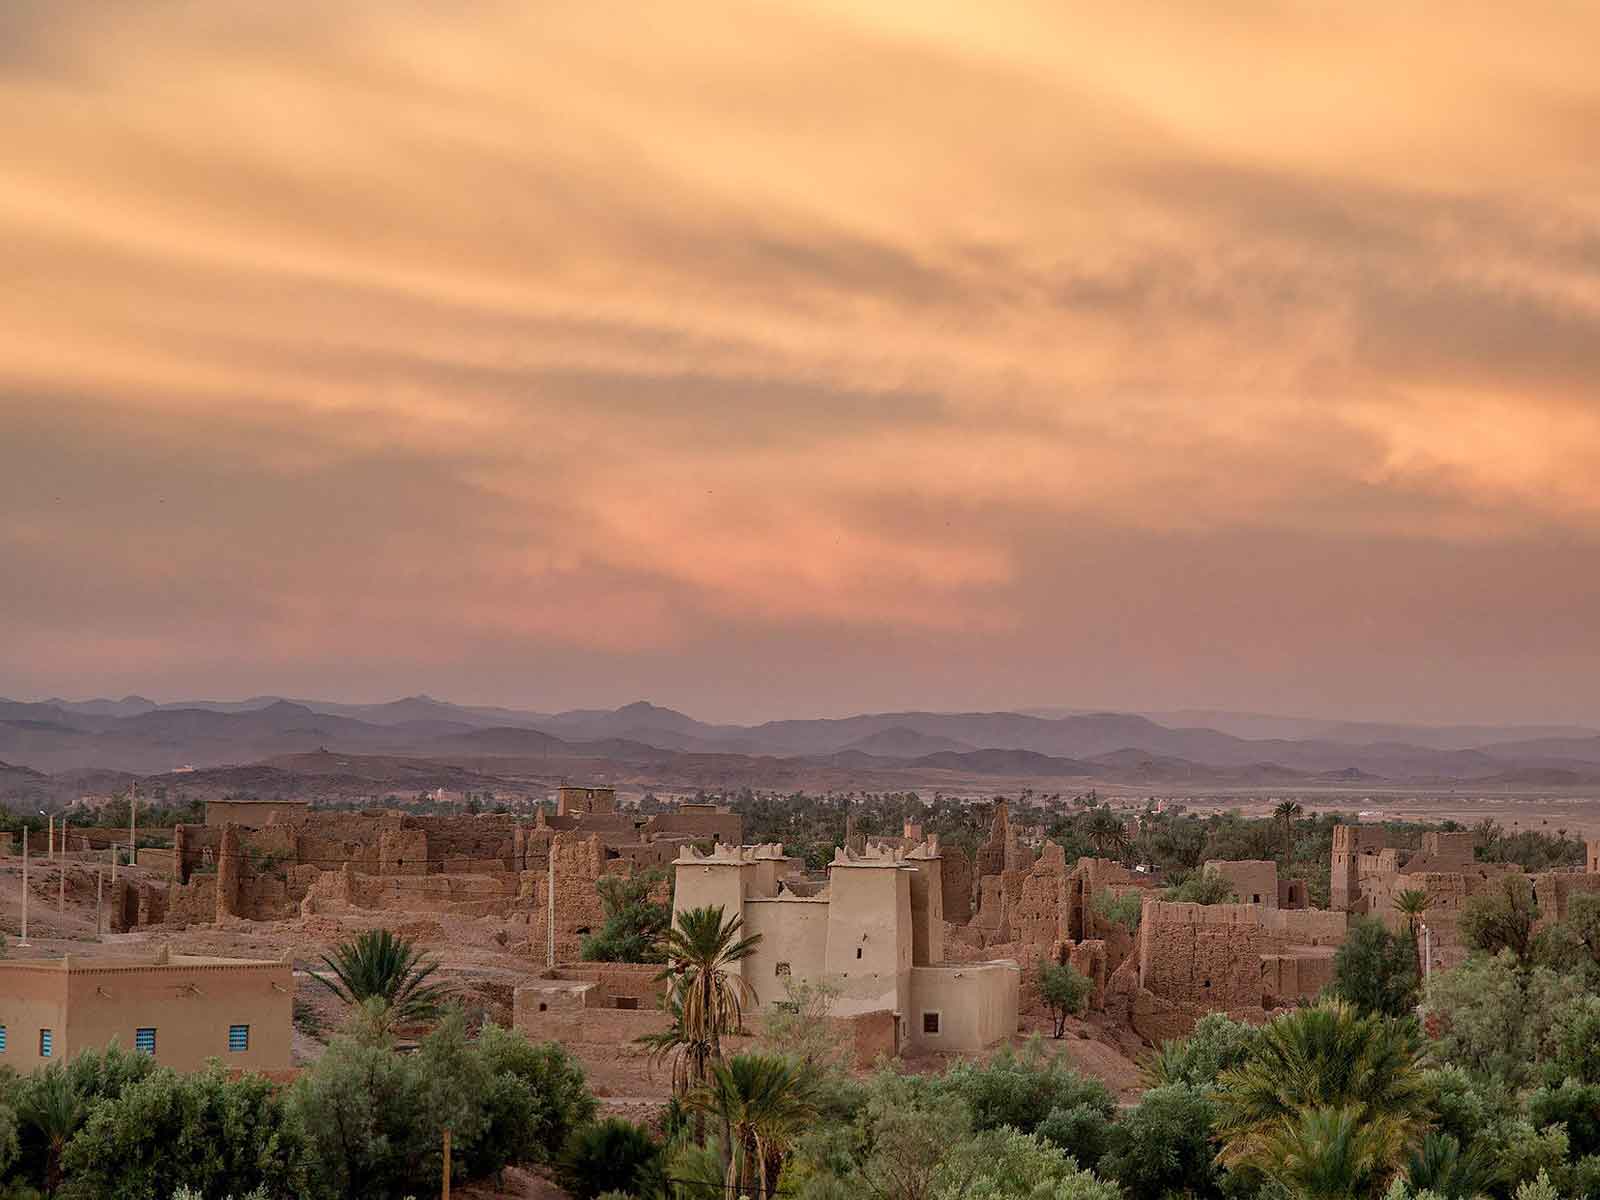 Morocco Sahara desert tour from Marrakech 4 days